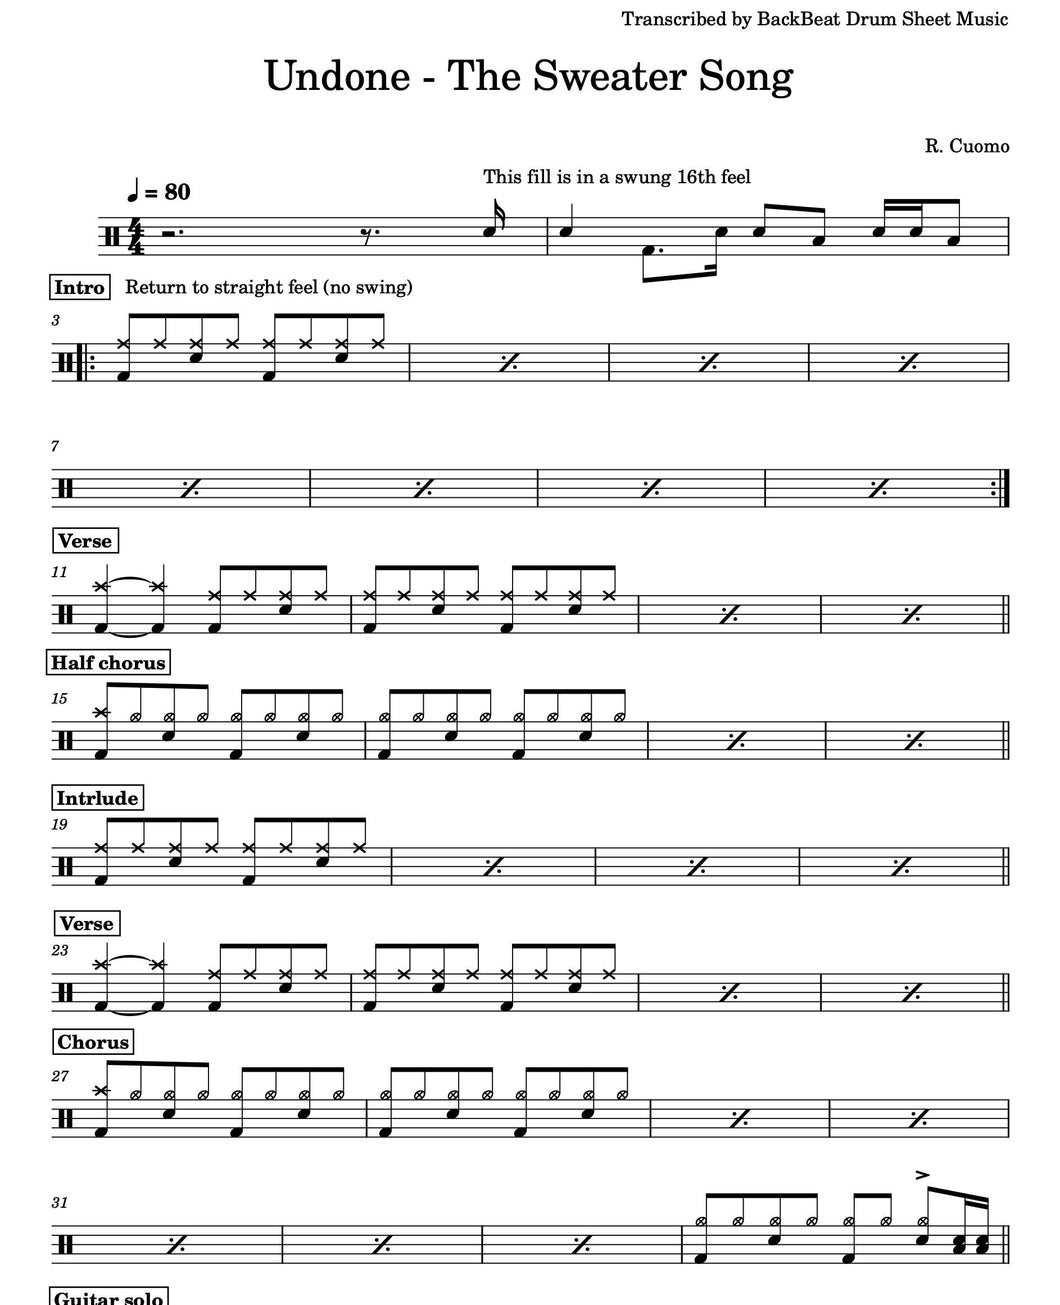 Undone (The Sweater Song) - Weezer - Full Drum Transcription / Drum Sheet Music - BackBeat Drum Sheet Music